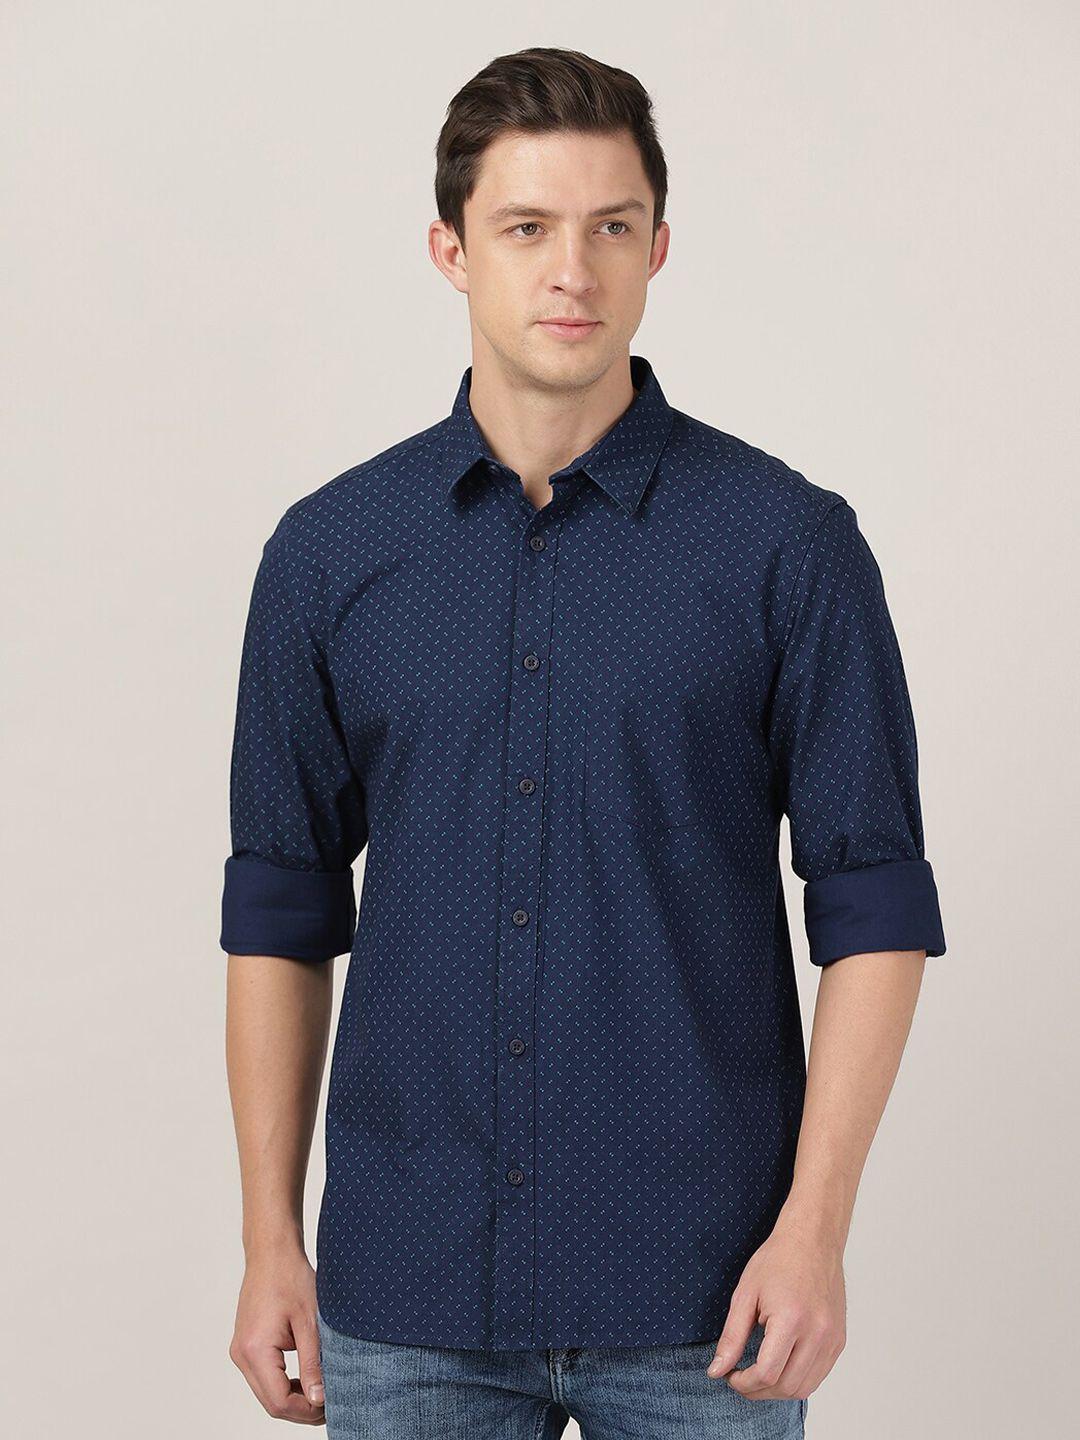 merchant marine men navy blue slim fit printed pure cotton casual shirt